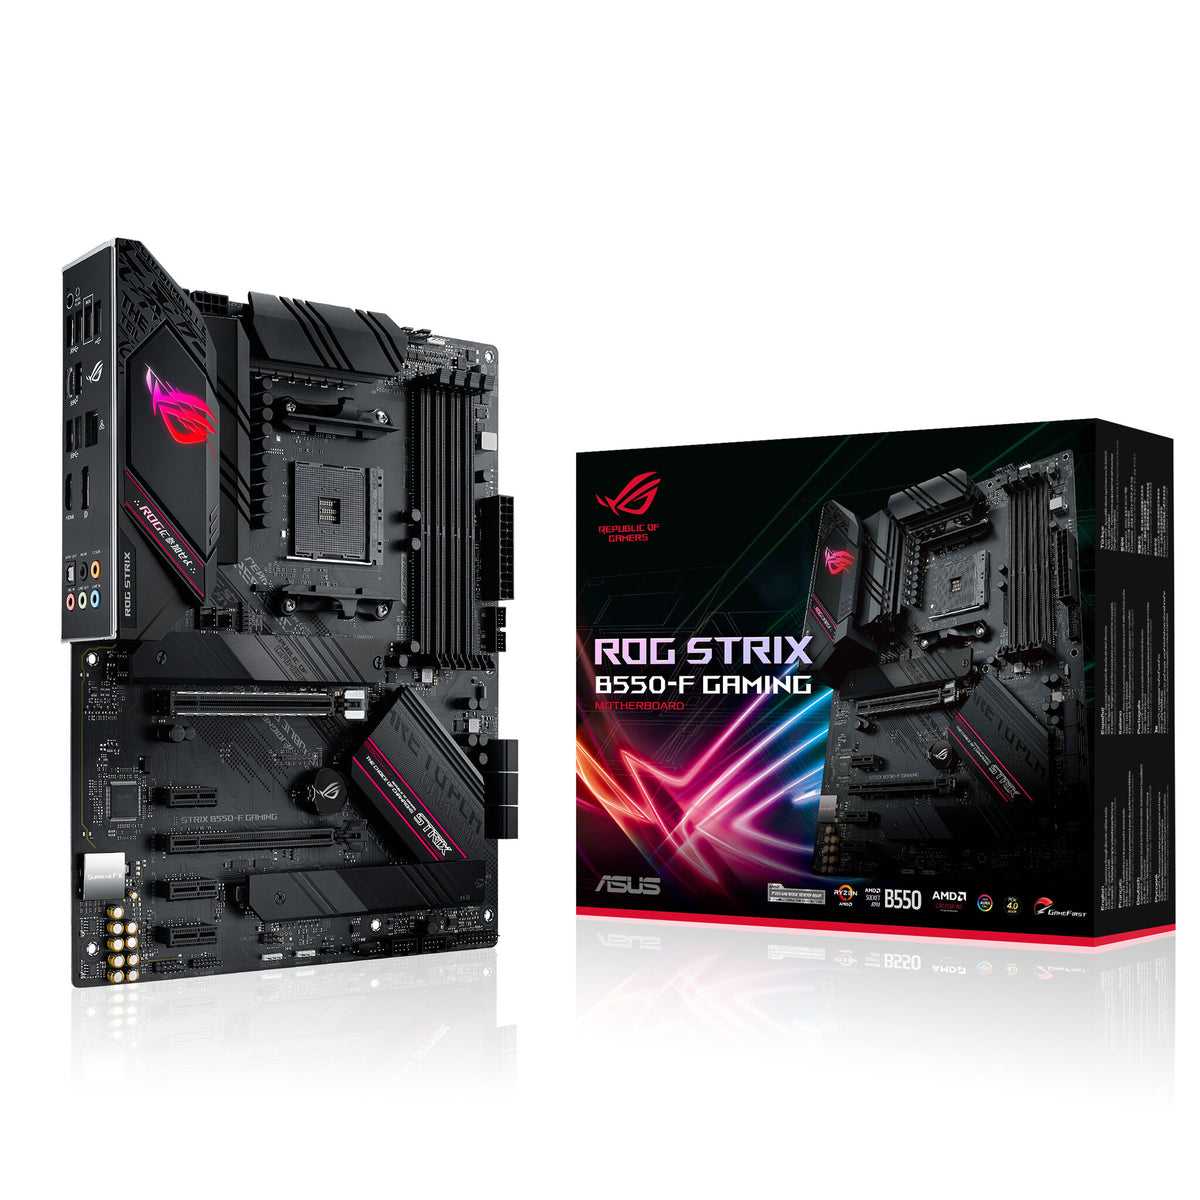 ASUS ROG STRIX B550-F GAMING ATX motherboard - AMD B550 Socket AM4